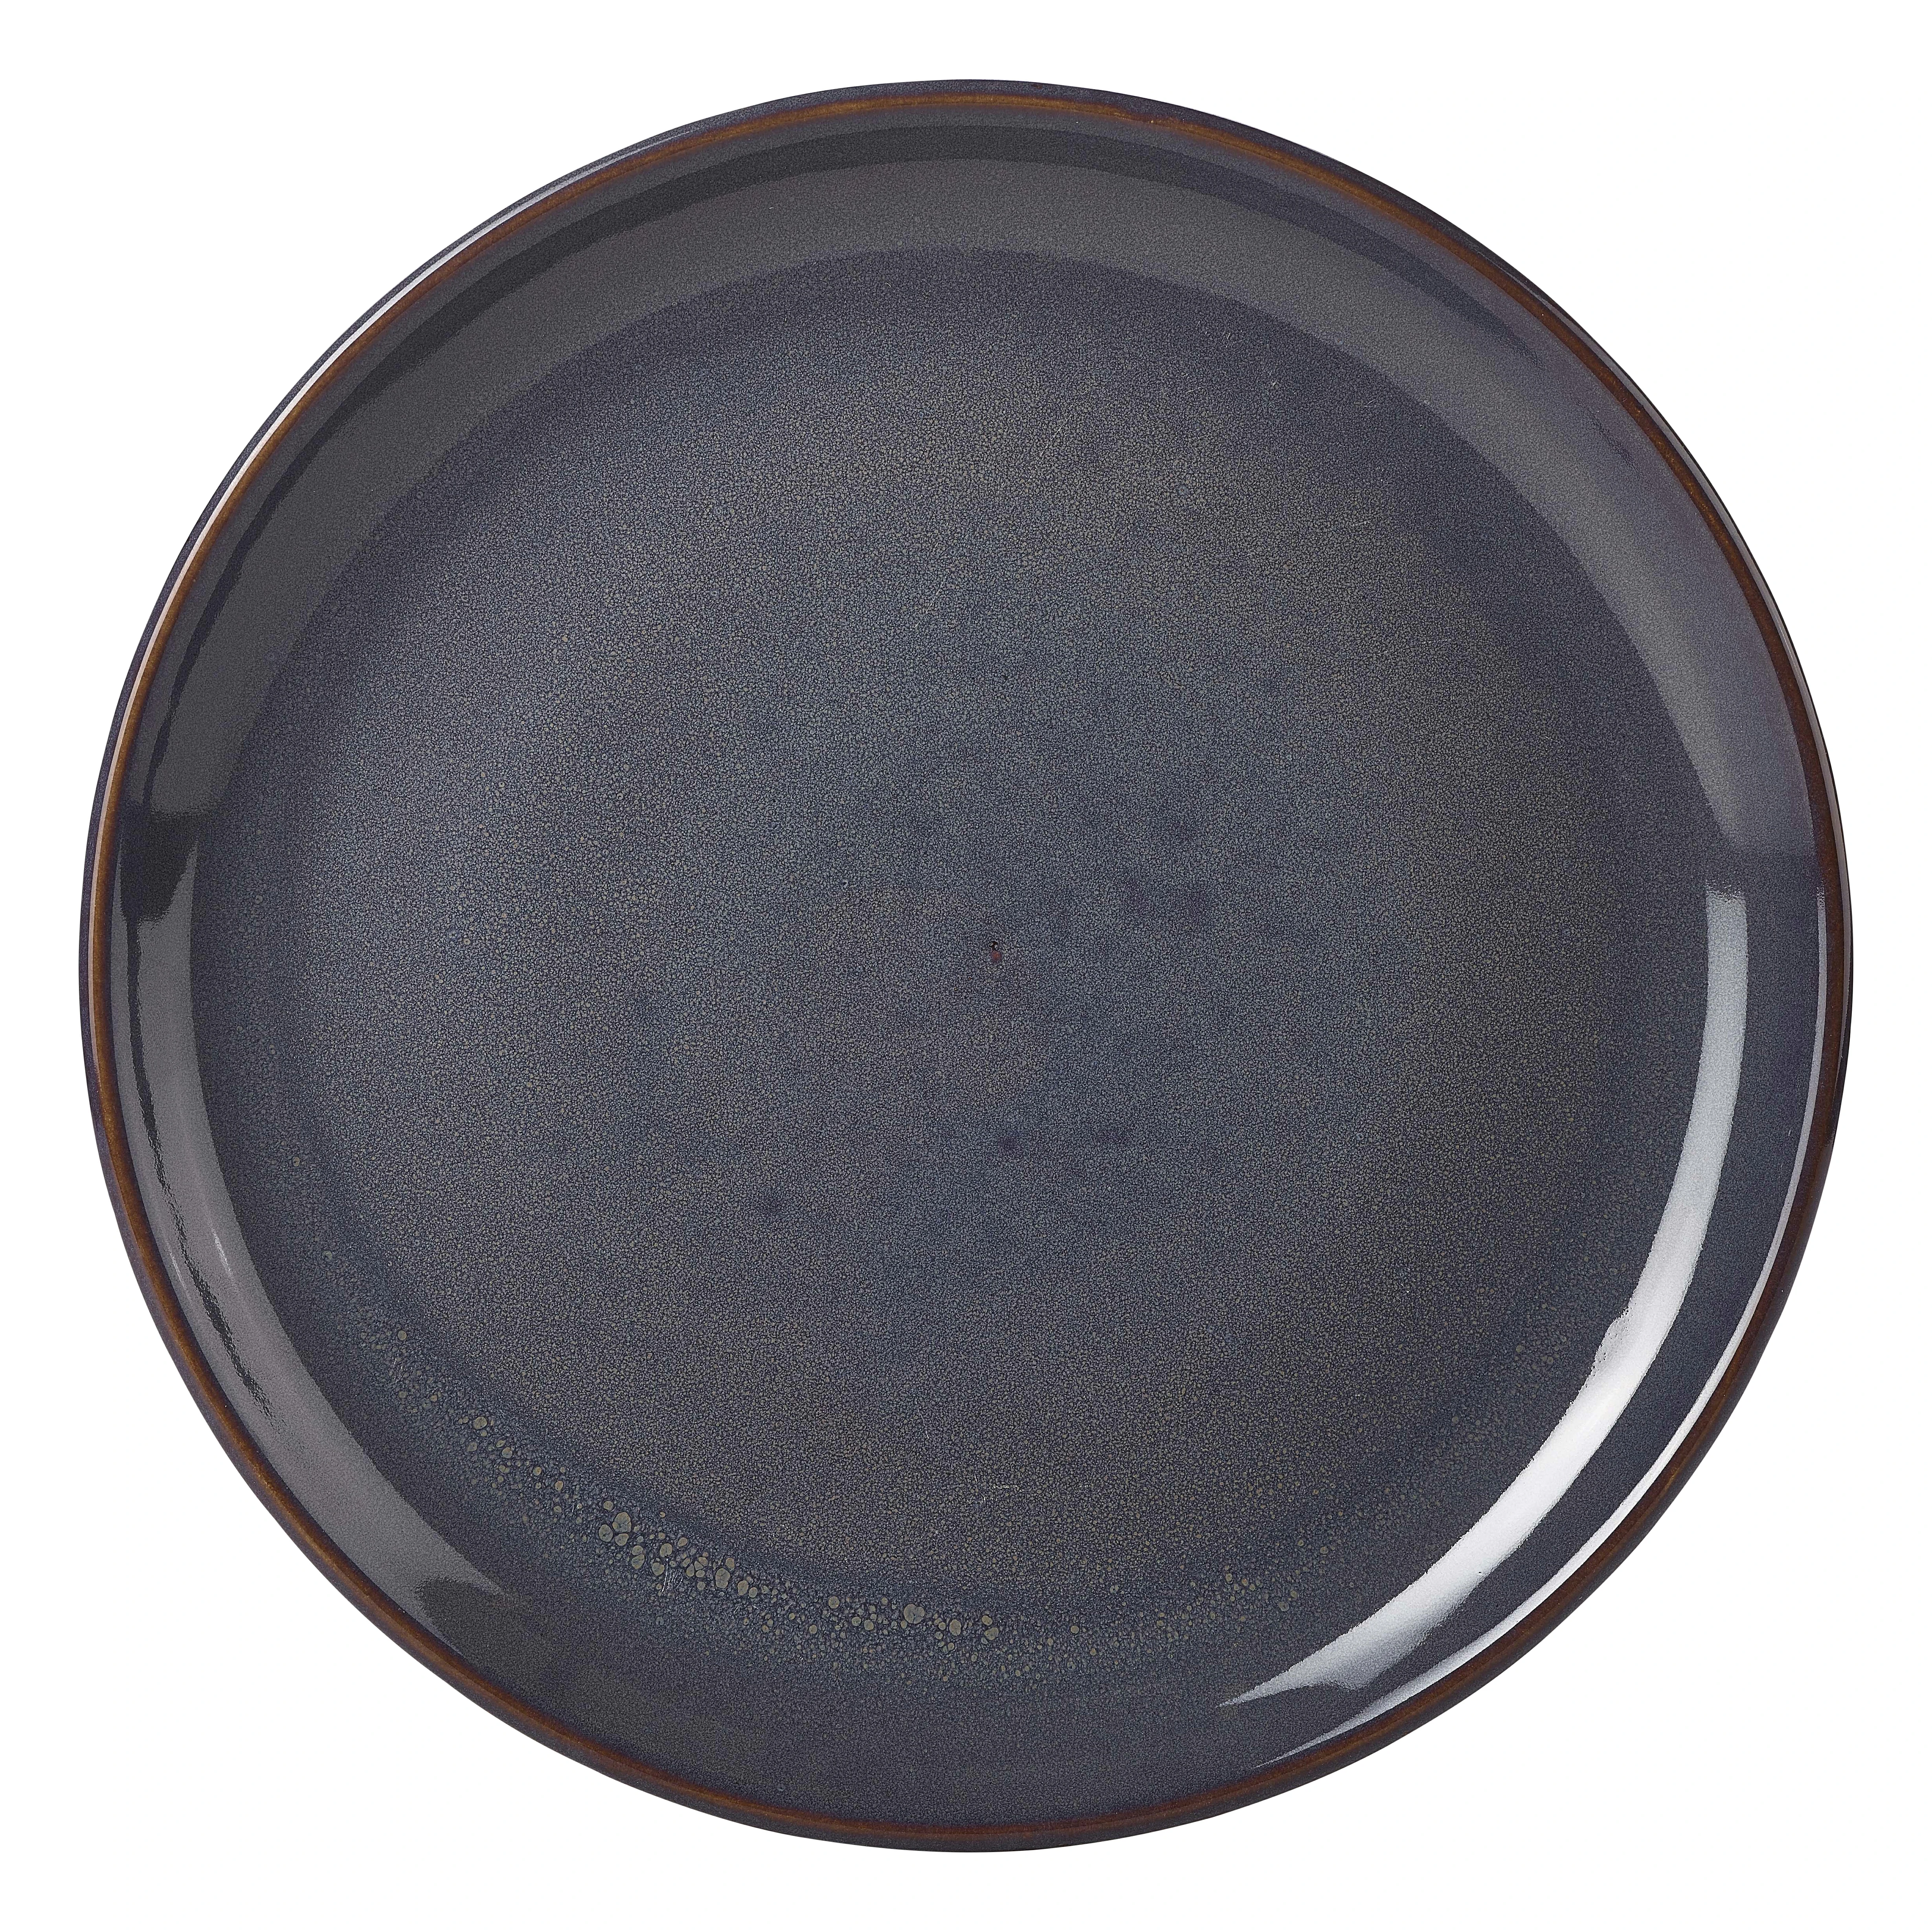 Terra Stoneware Rustic Blue Coupe Plate 19cm